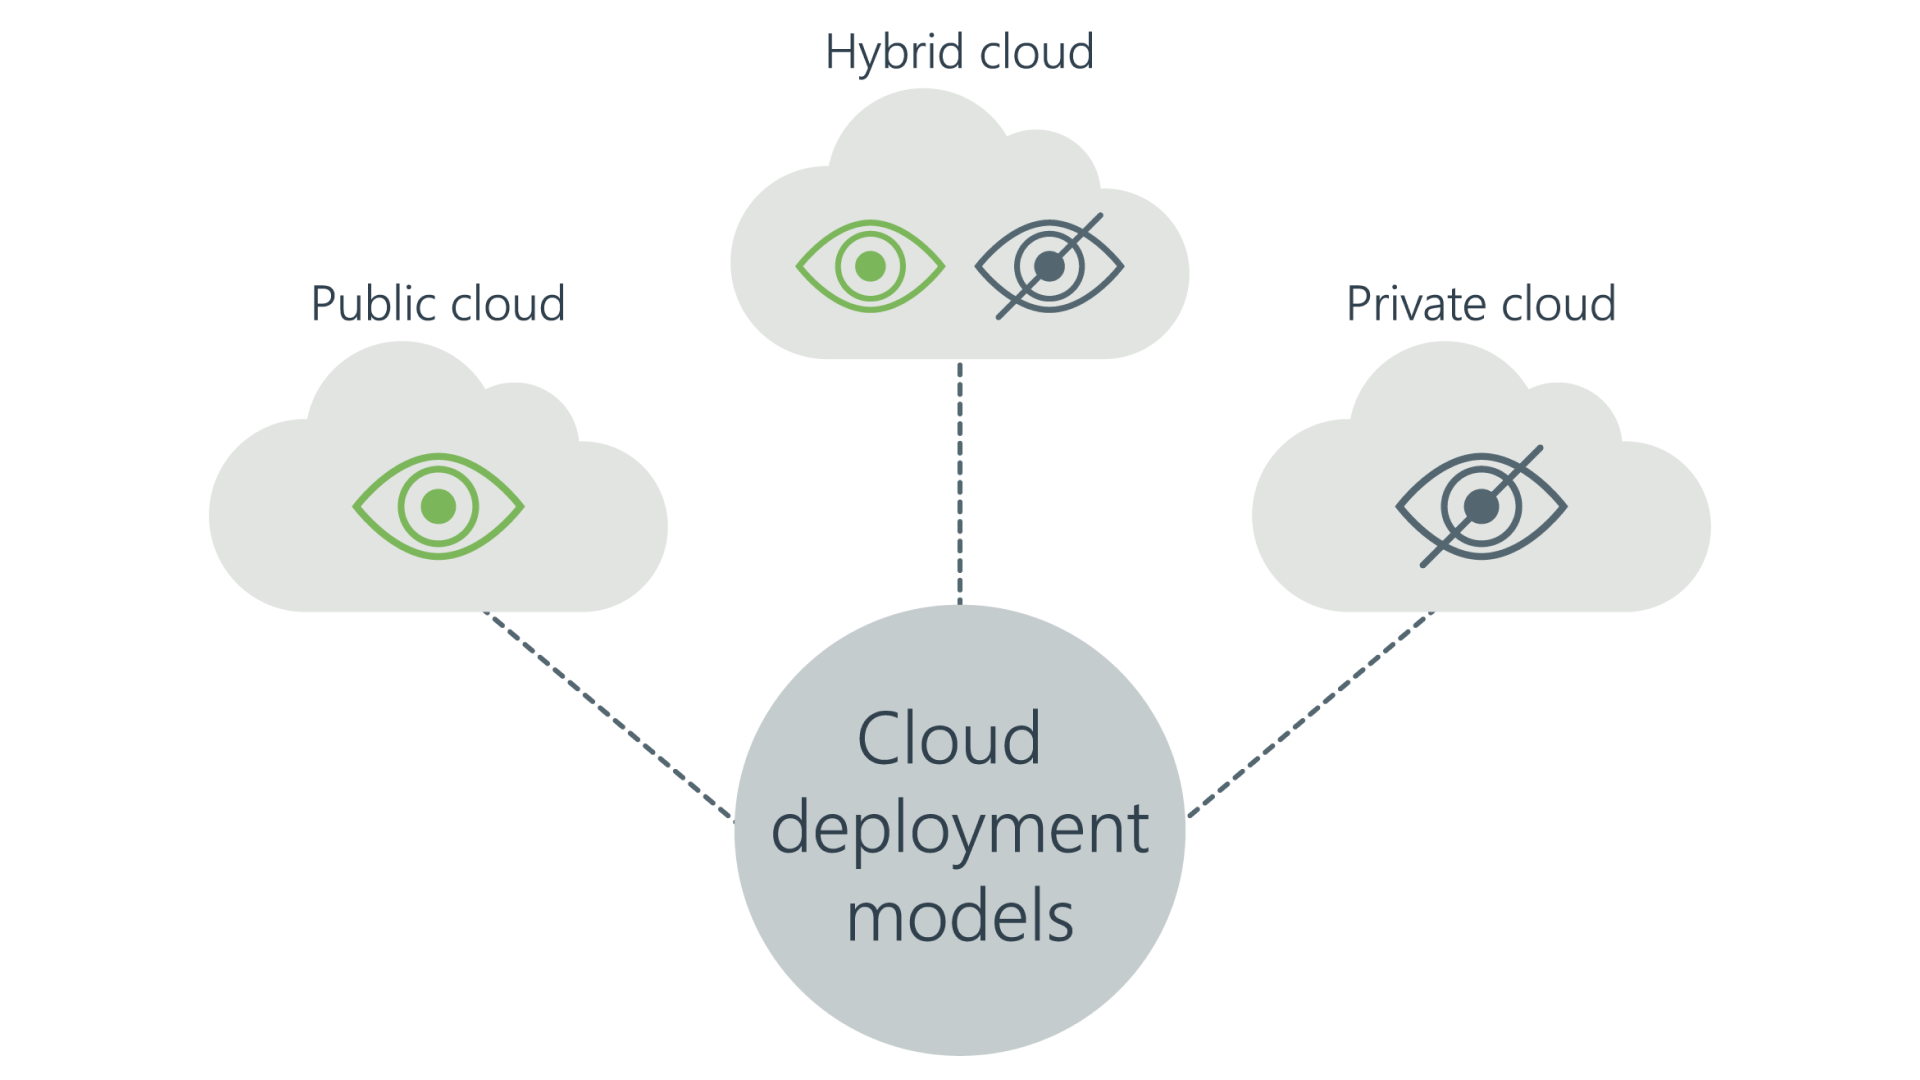 Multi-cloud, hybrid cloud, private cloud, and public cloud scheme to describe cloud deployment models and cloud transformation strategies